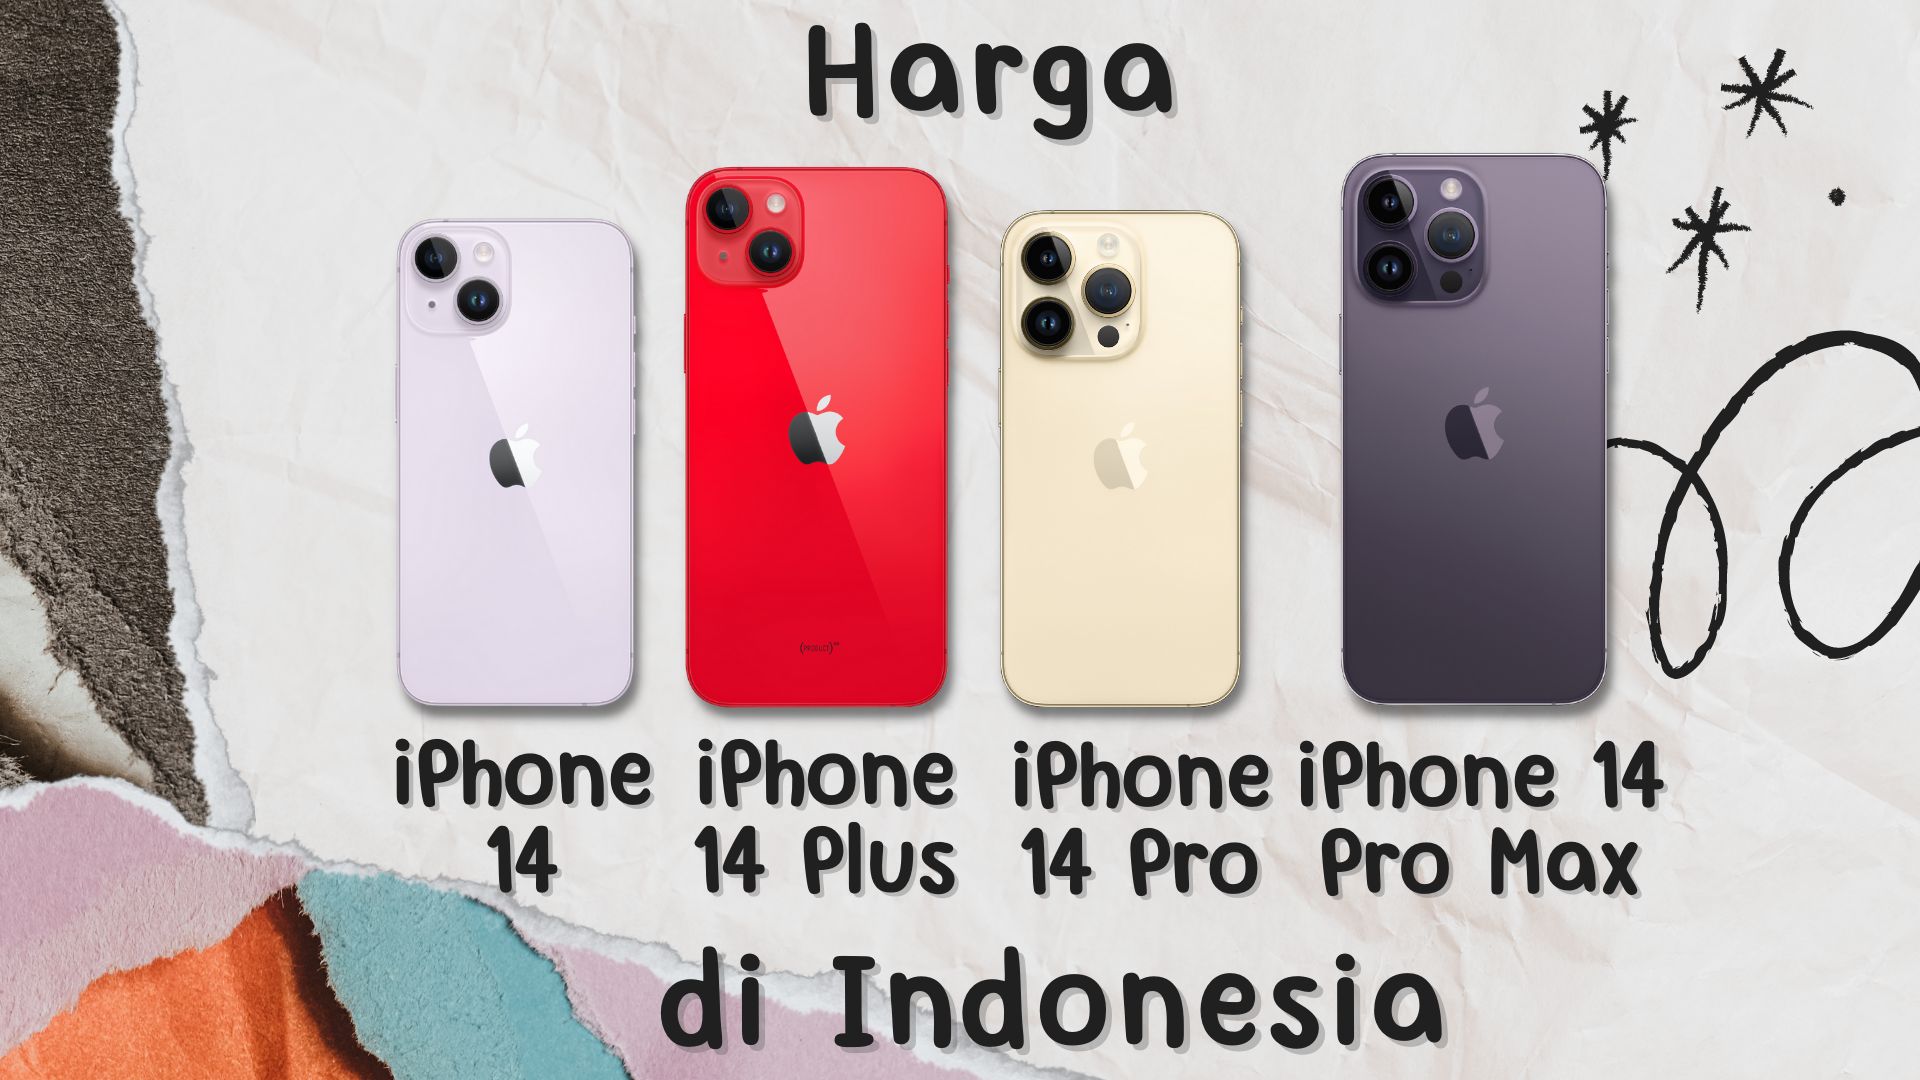 Daftar Harga Resmi iPhone 14, iPhone 14 Plus, iPhone 14 Pro dan iPhone 14 Pro Max di Indonesia